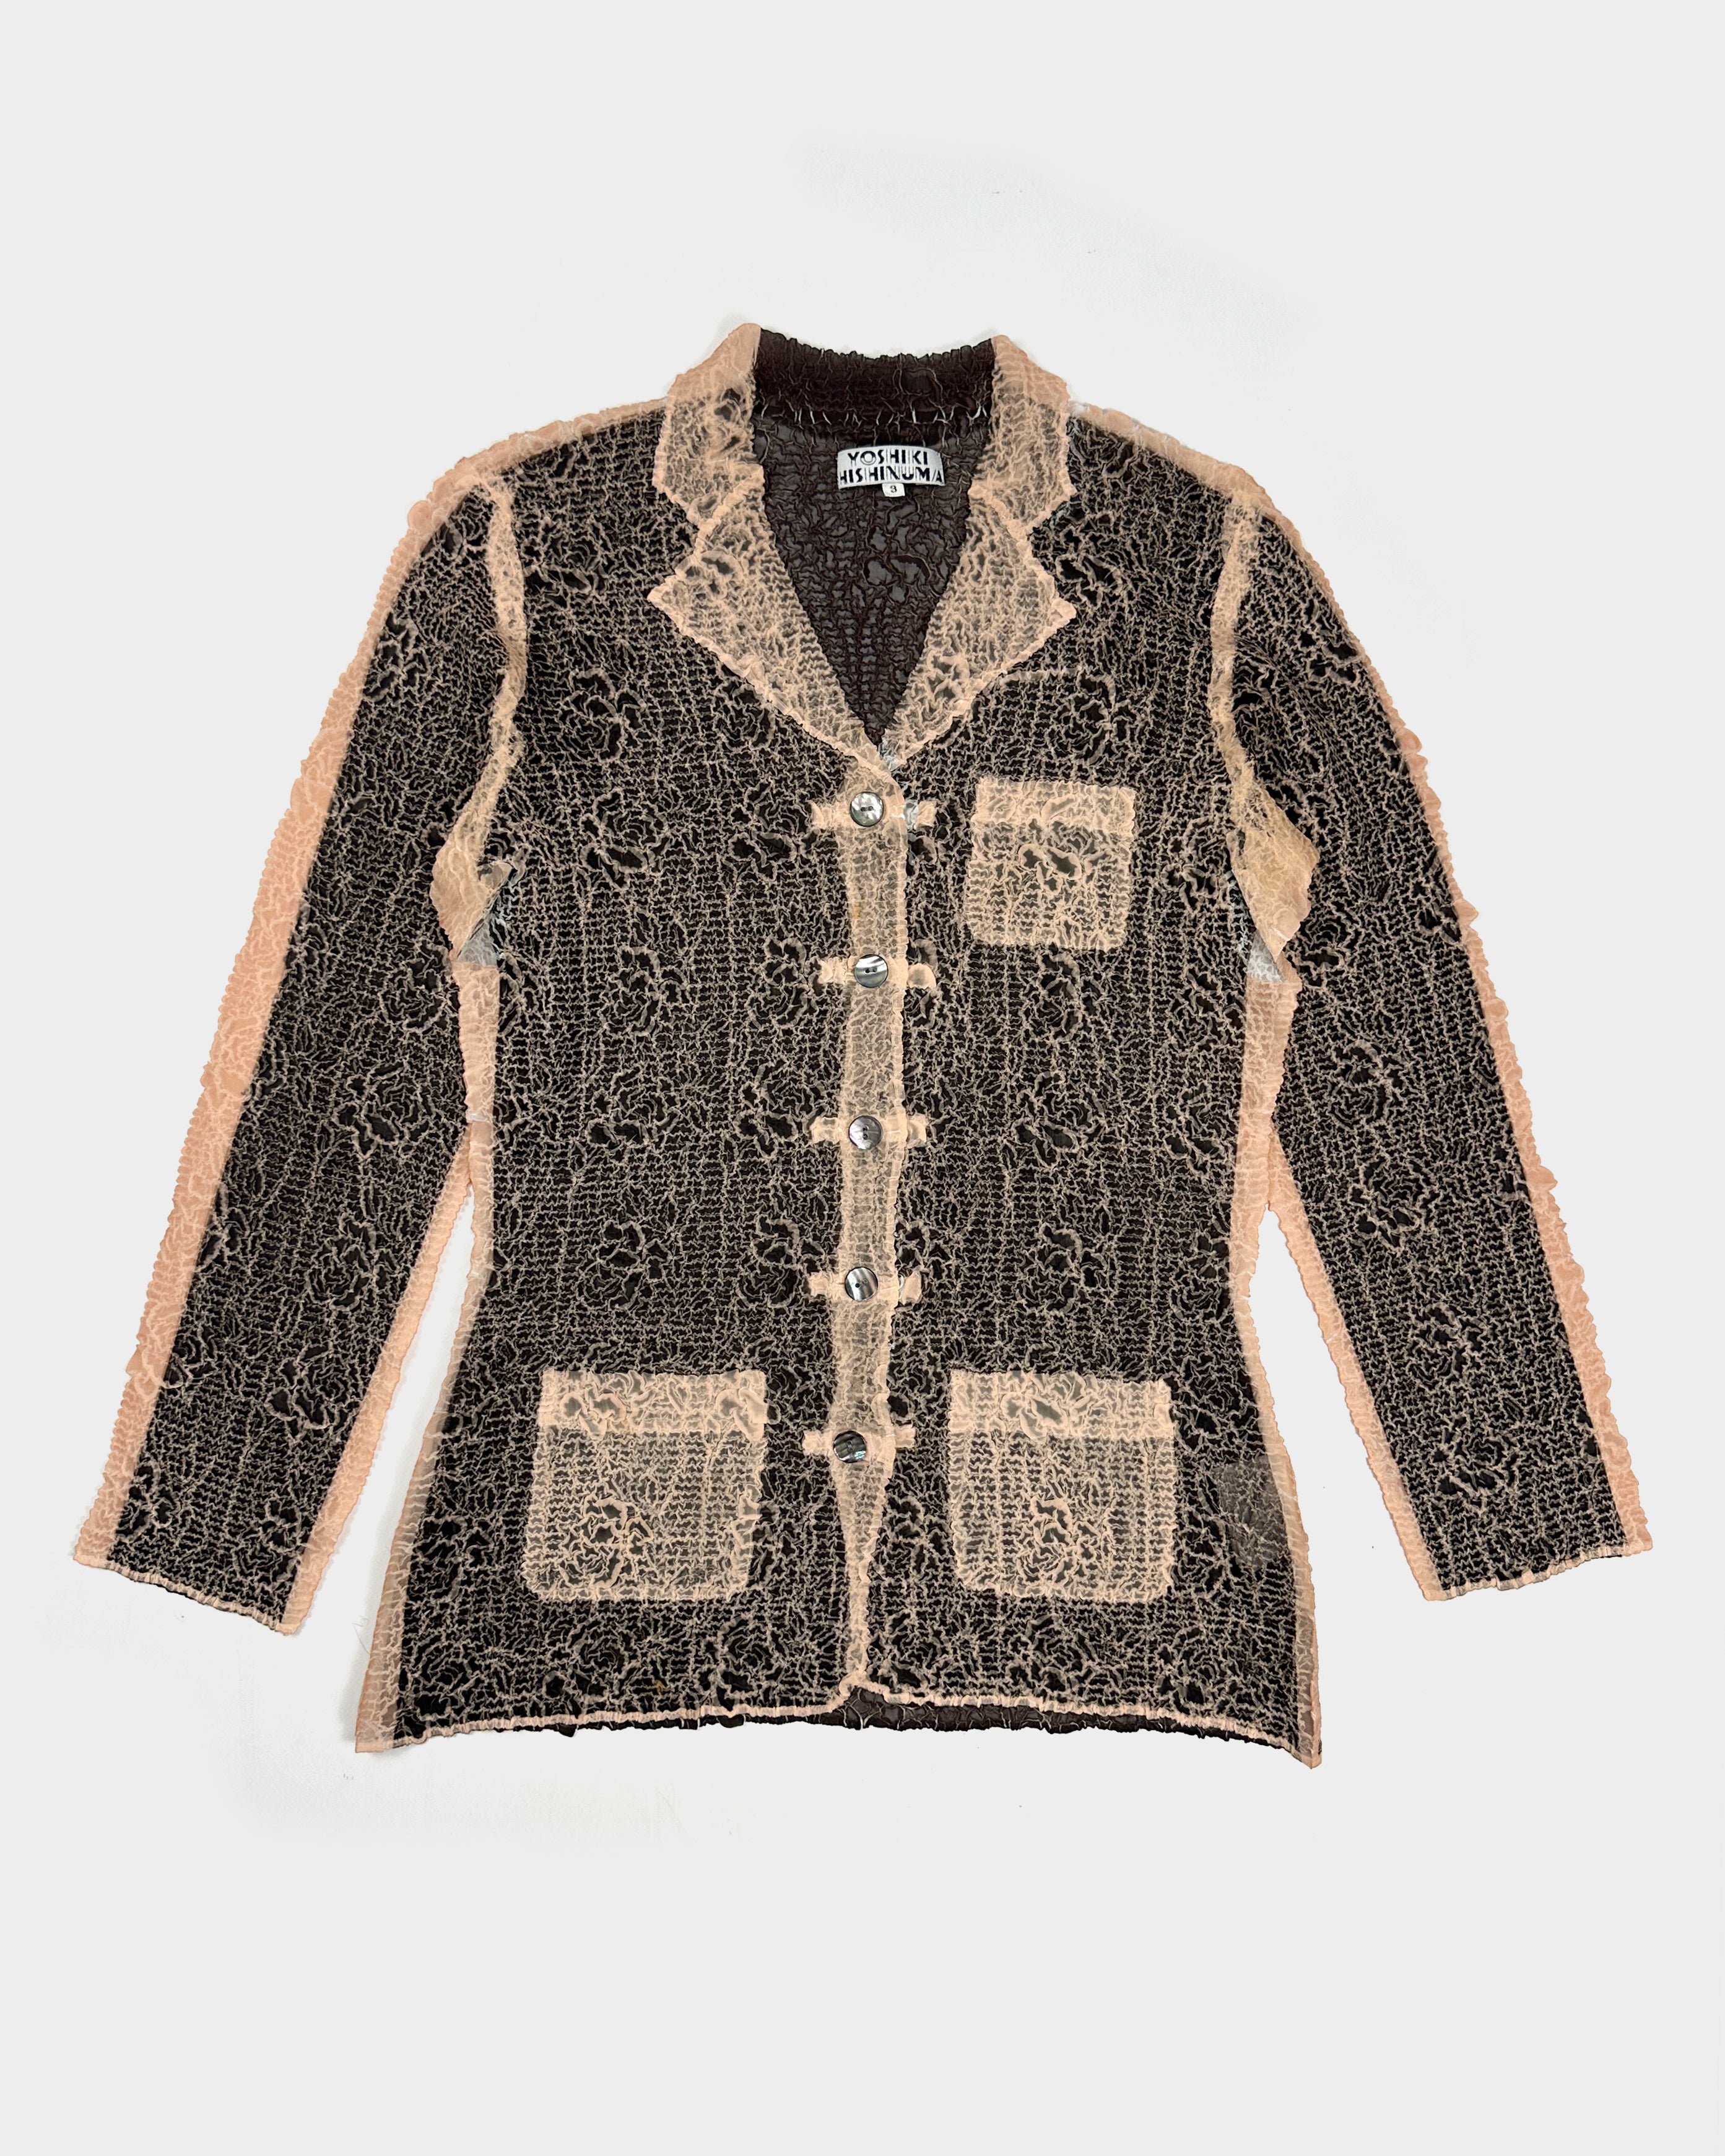 Yoshiki Hishinuma Textured Long Sleeve Shirt 1990's – Vintage TTS